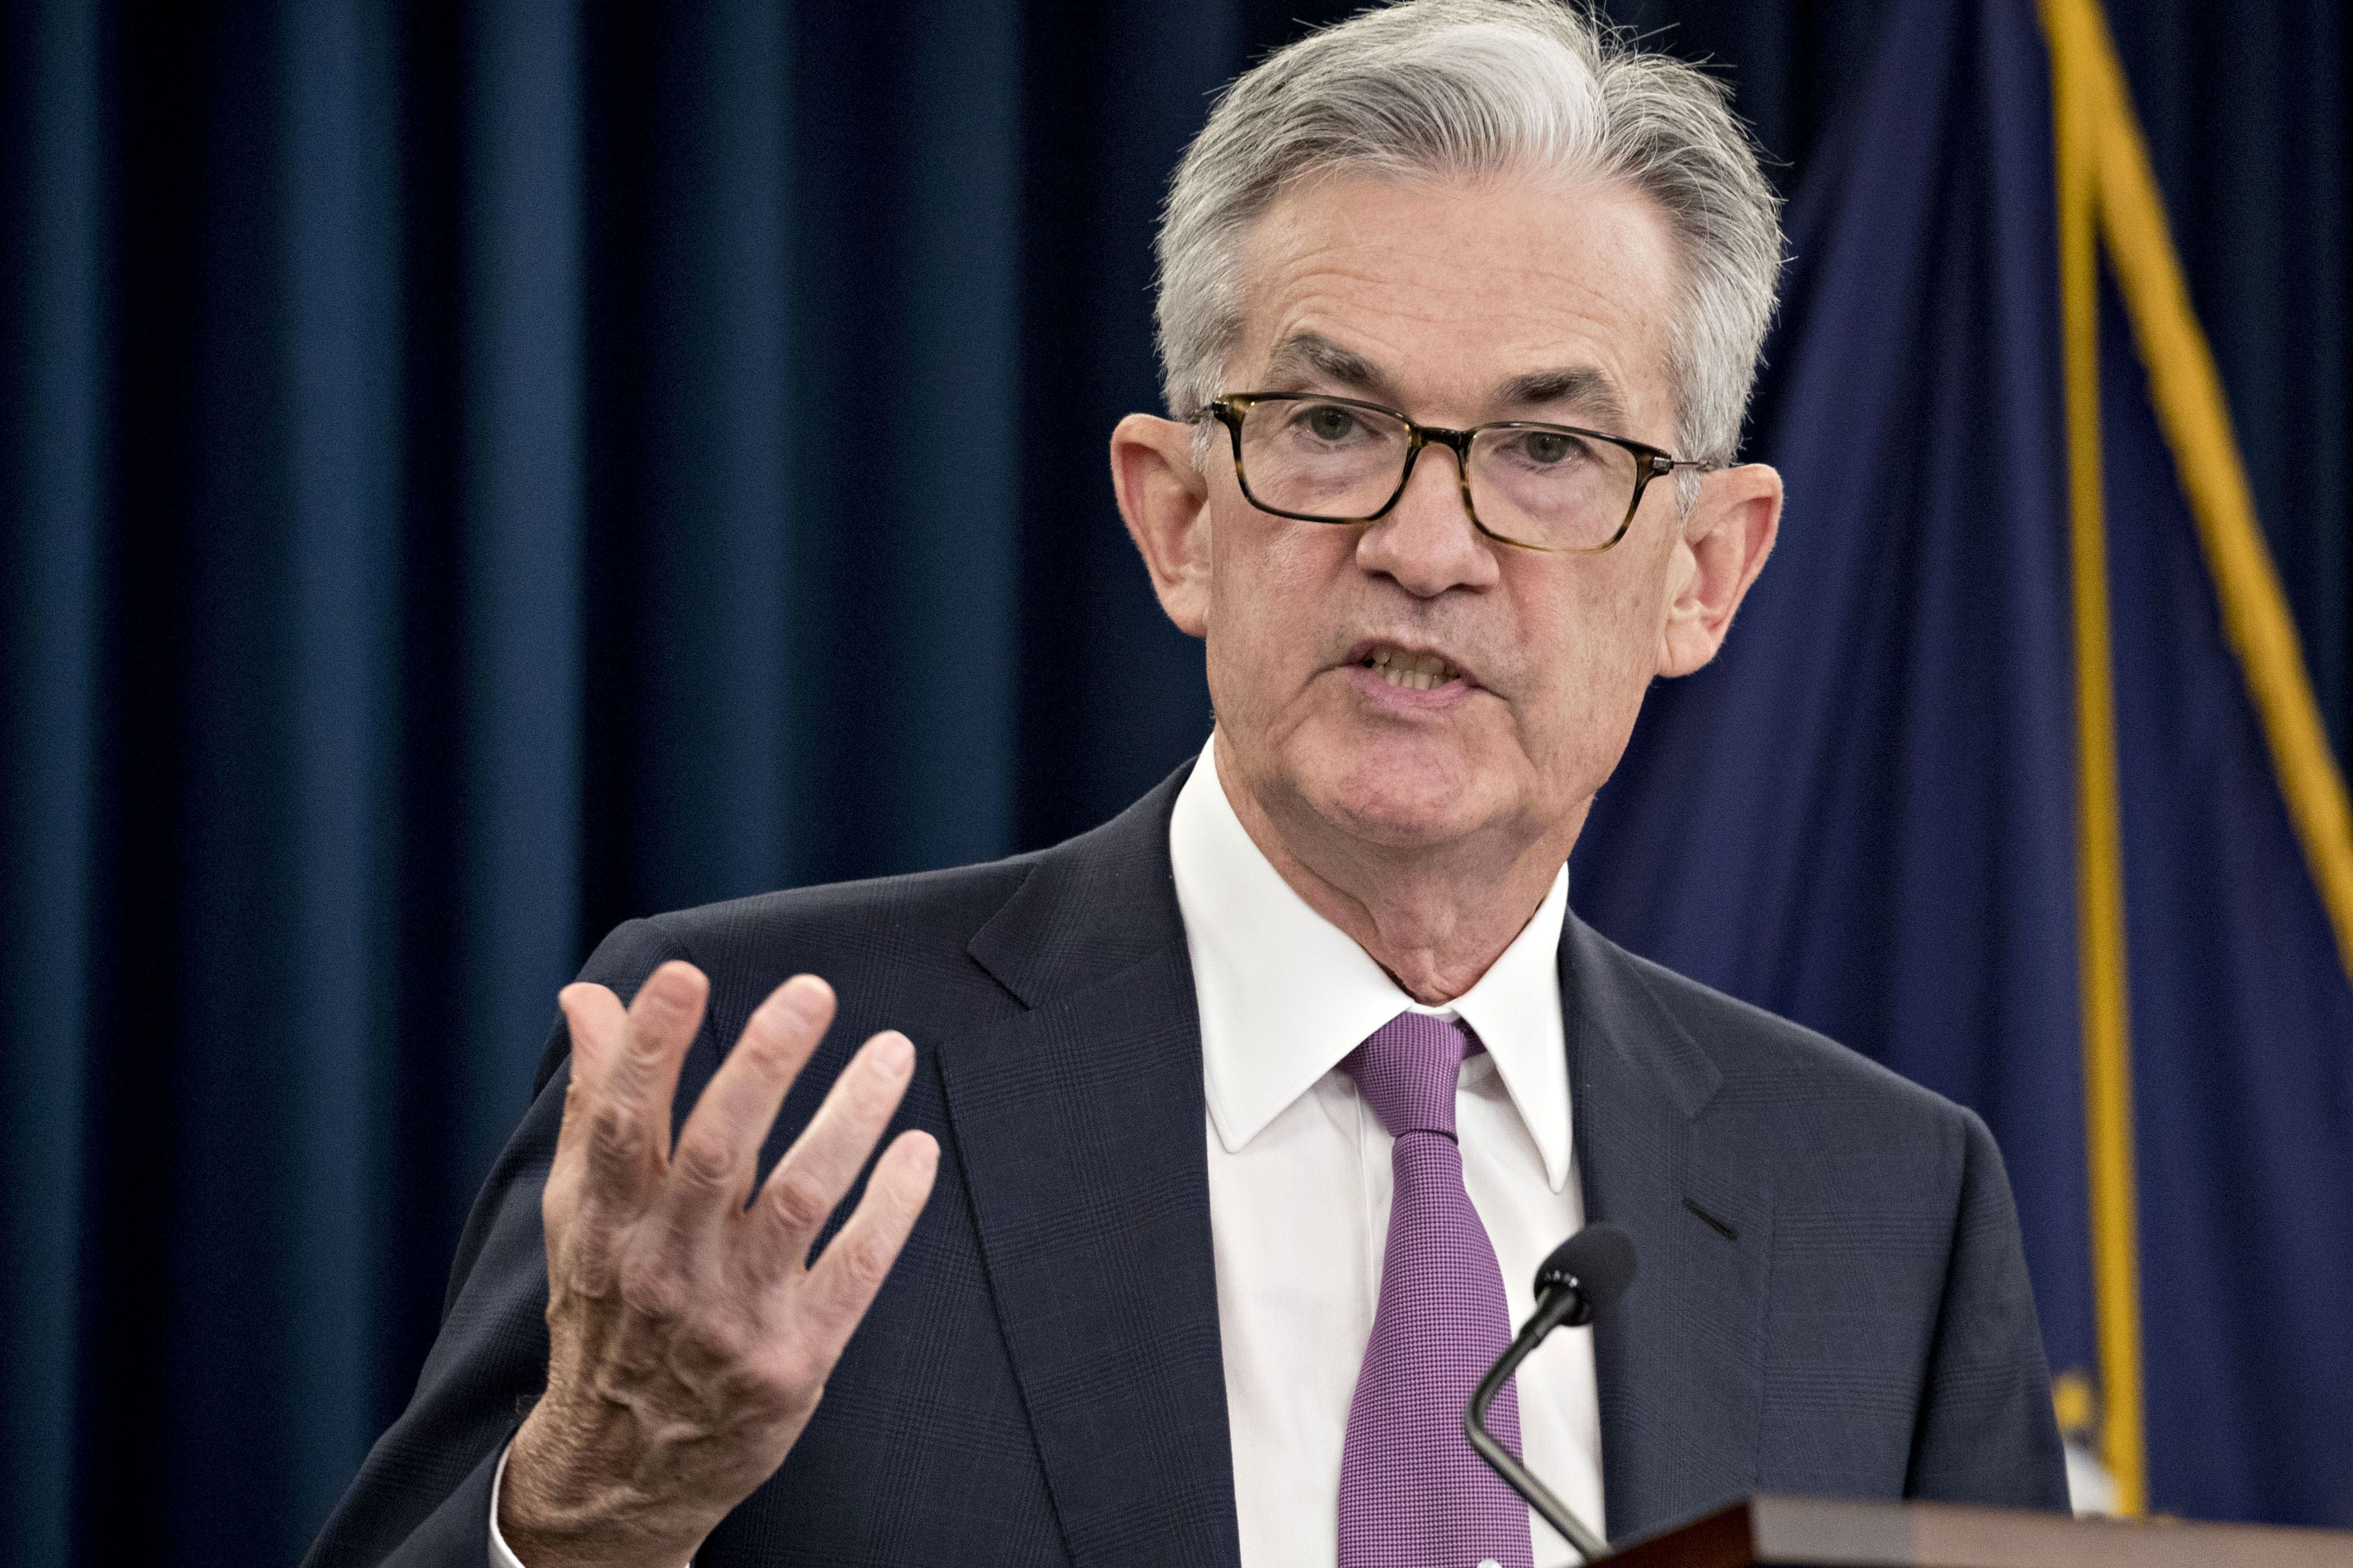 Wall Street in focus as investors await more Fed talk